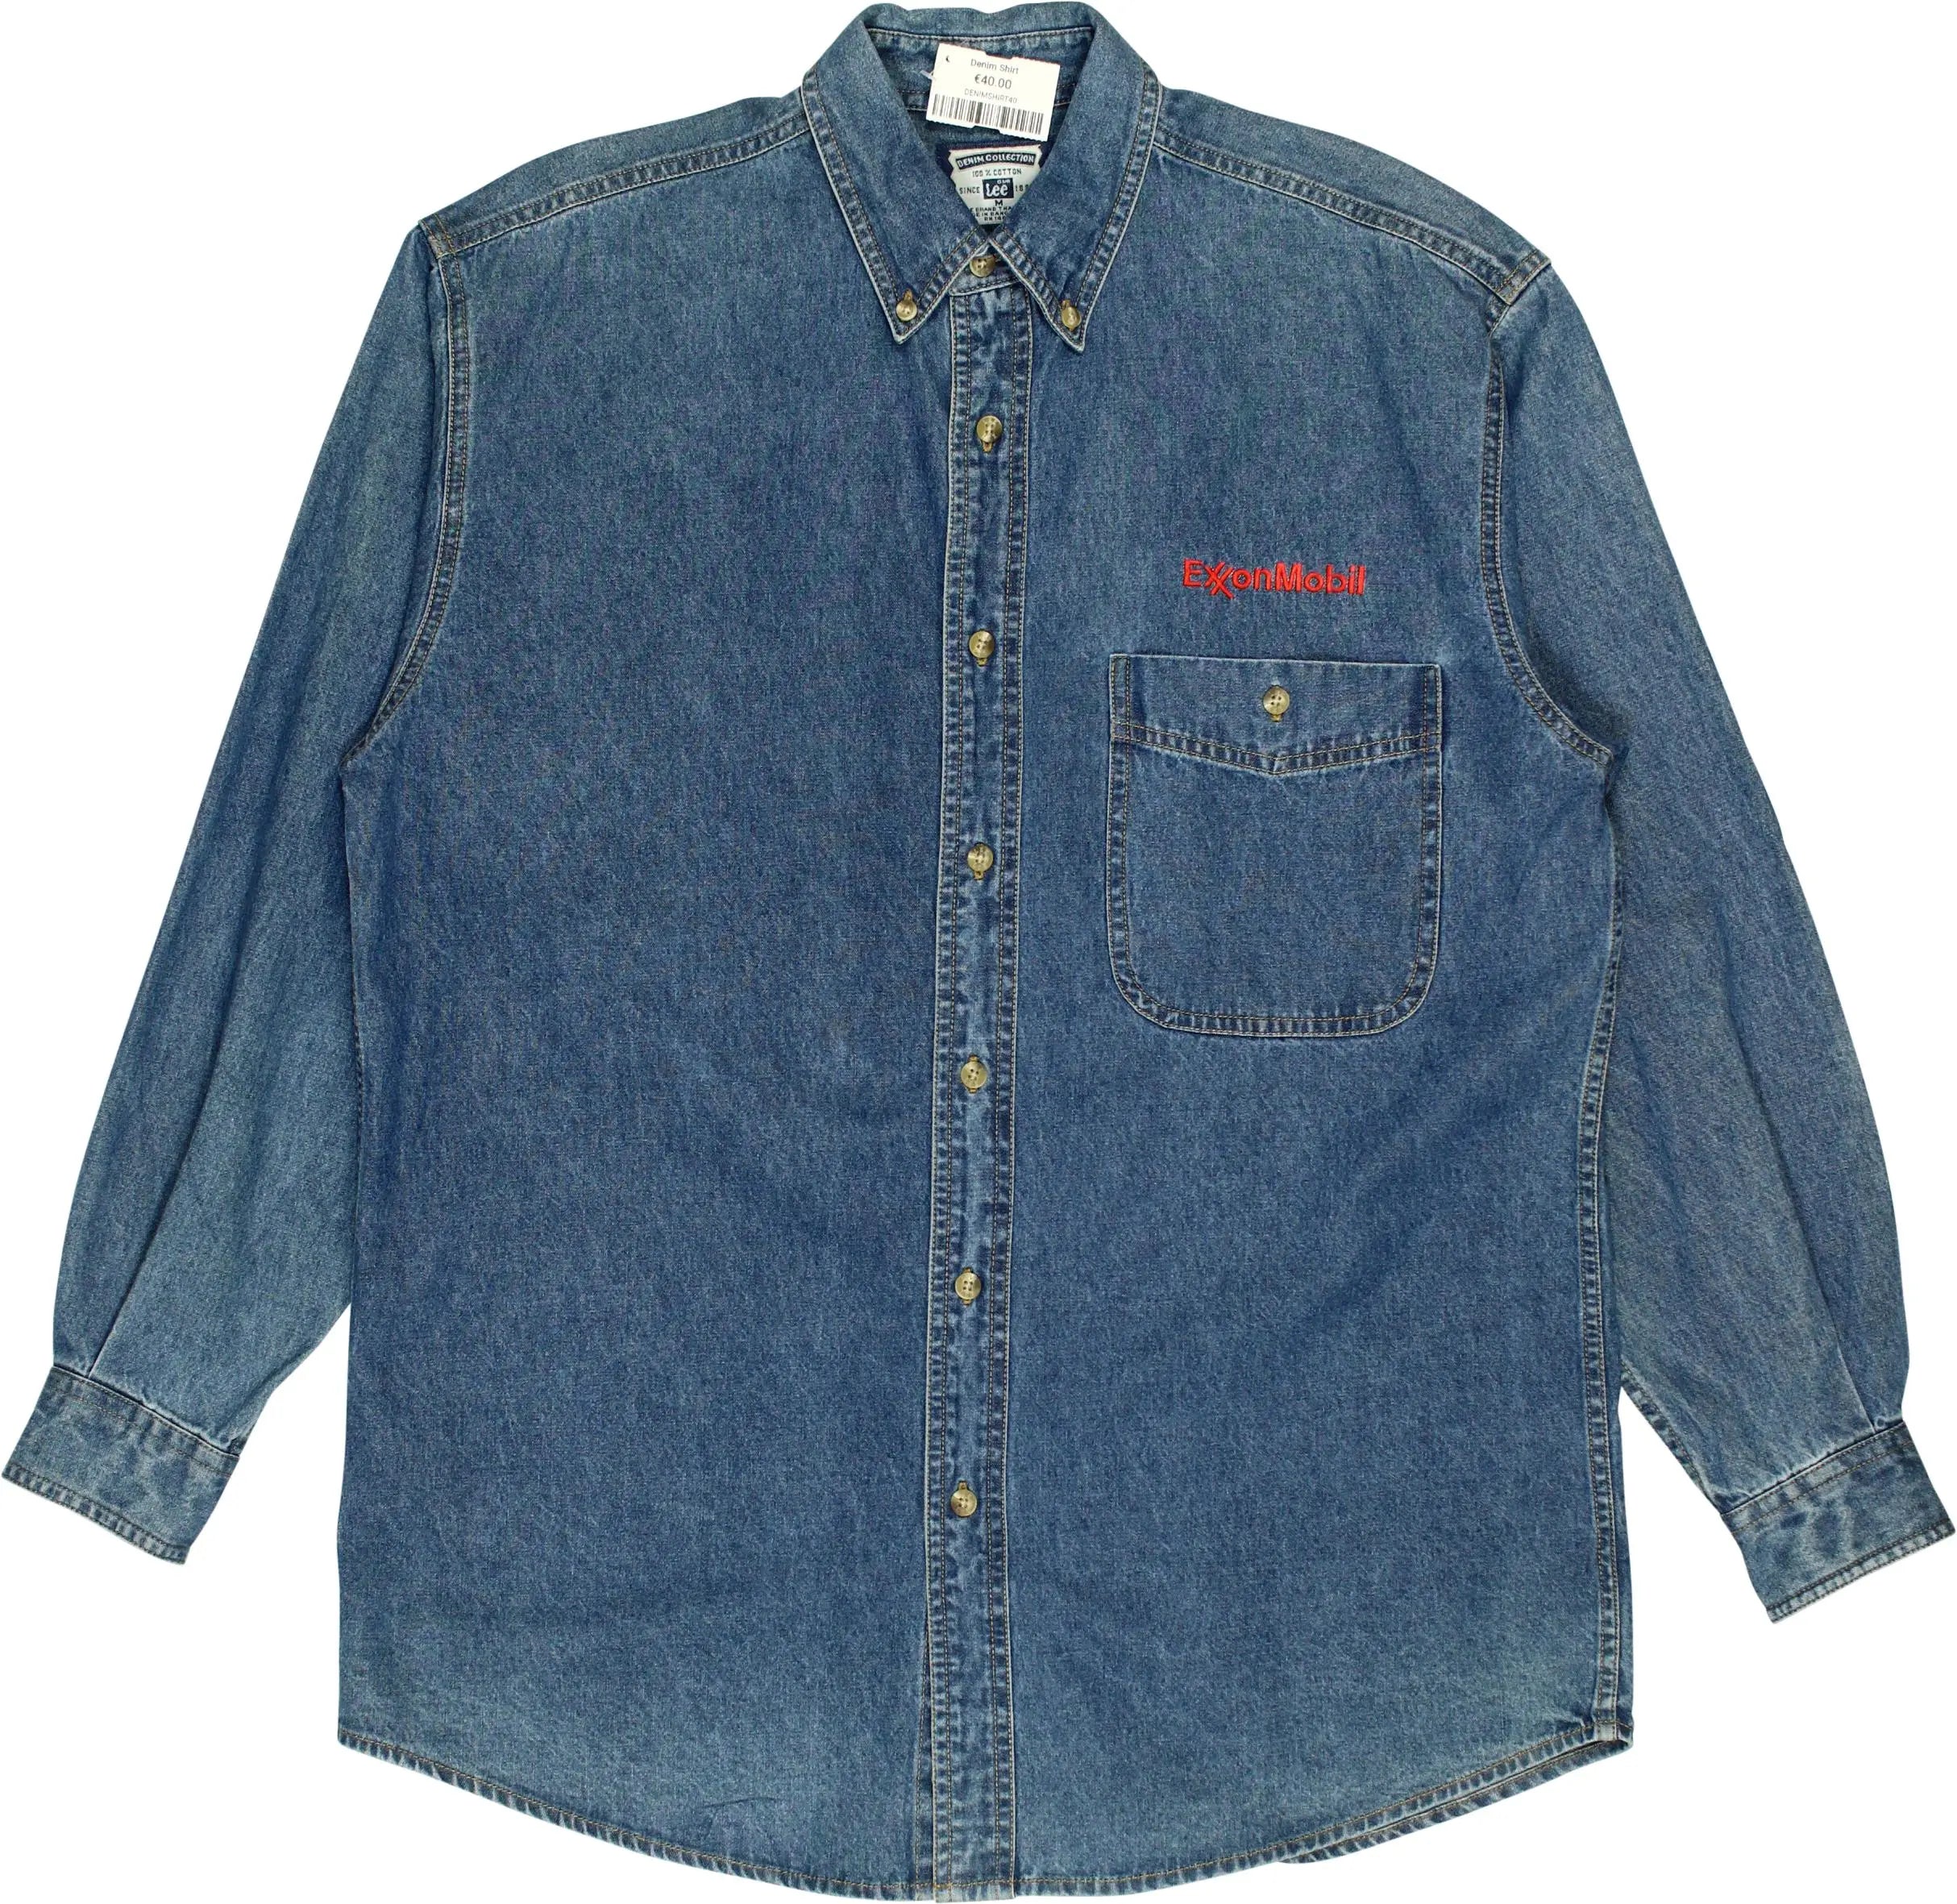 Lee - Denim Shirt- ThriftTale.com - Vintage and second handclothing